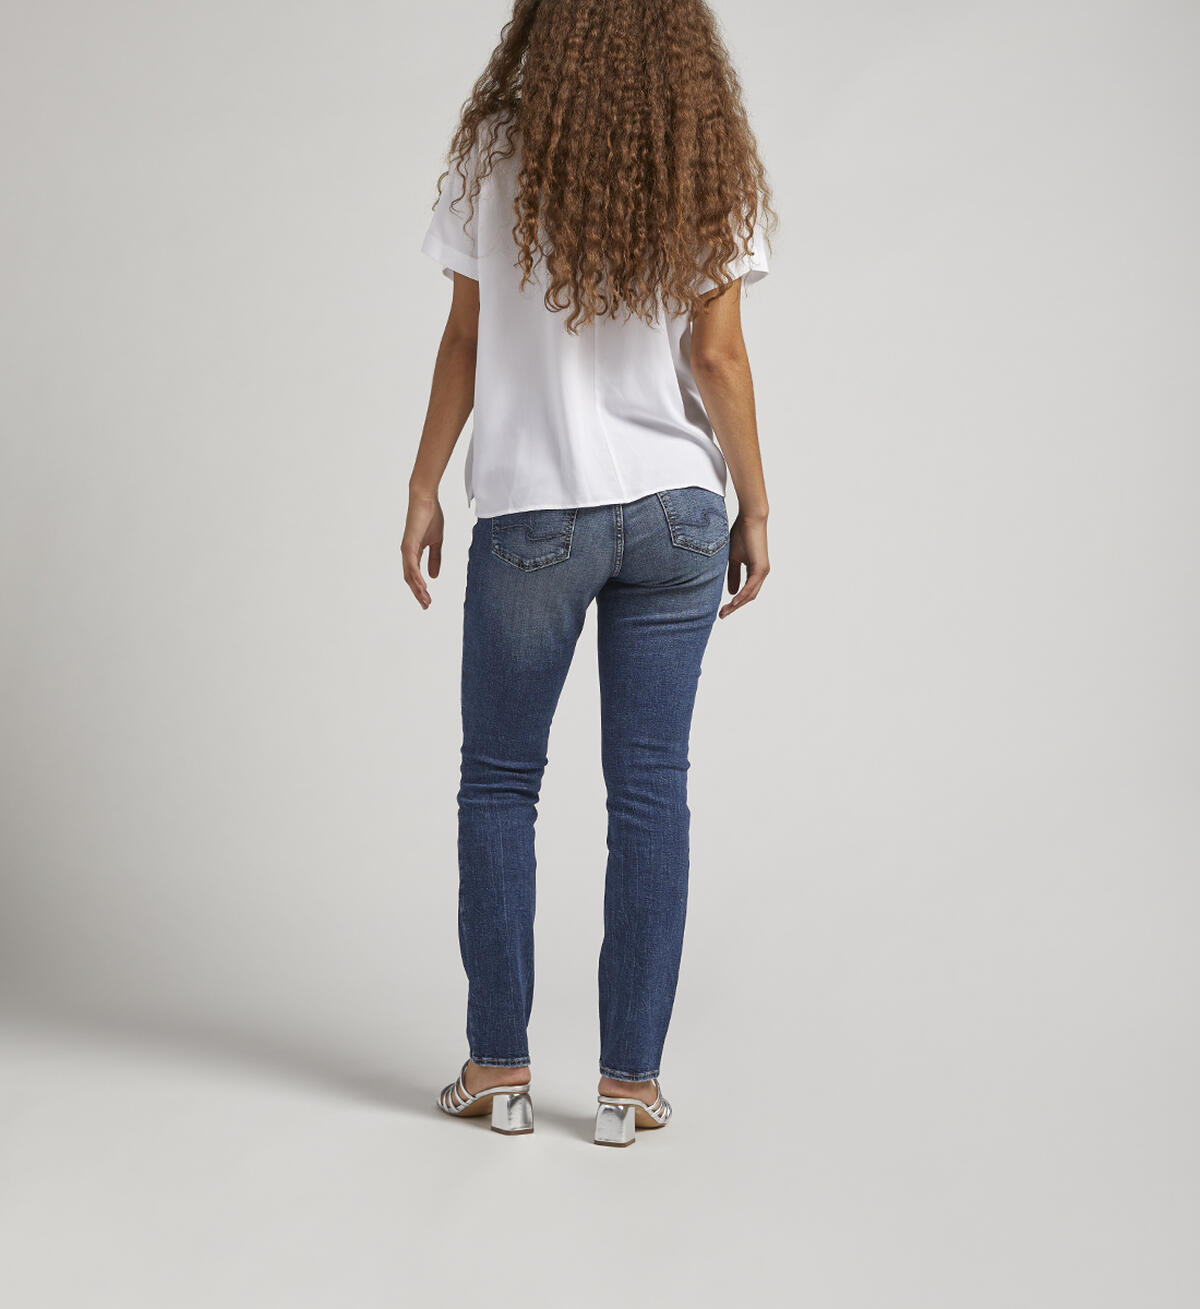 Elyse Mid Rise Straight Leg Jeans, Indigo, hi-res image number 1